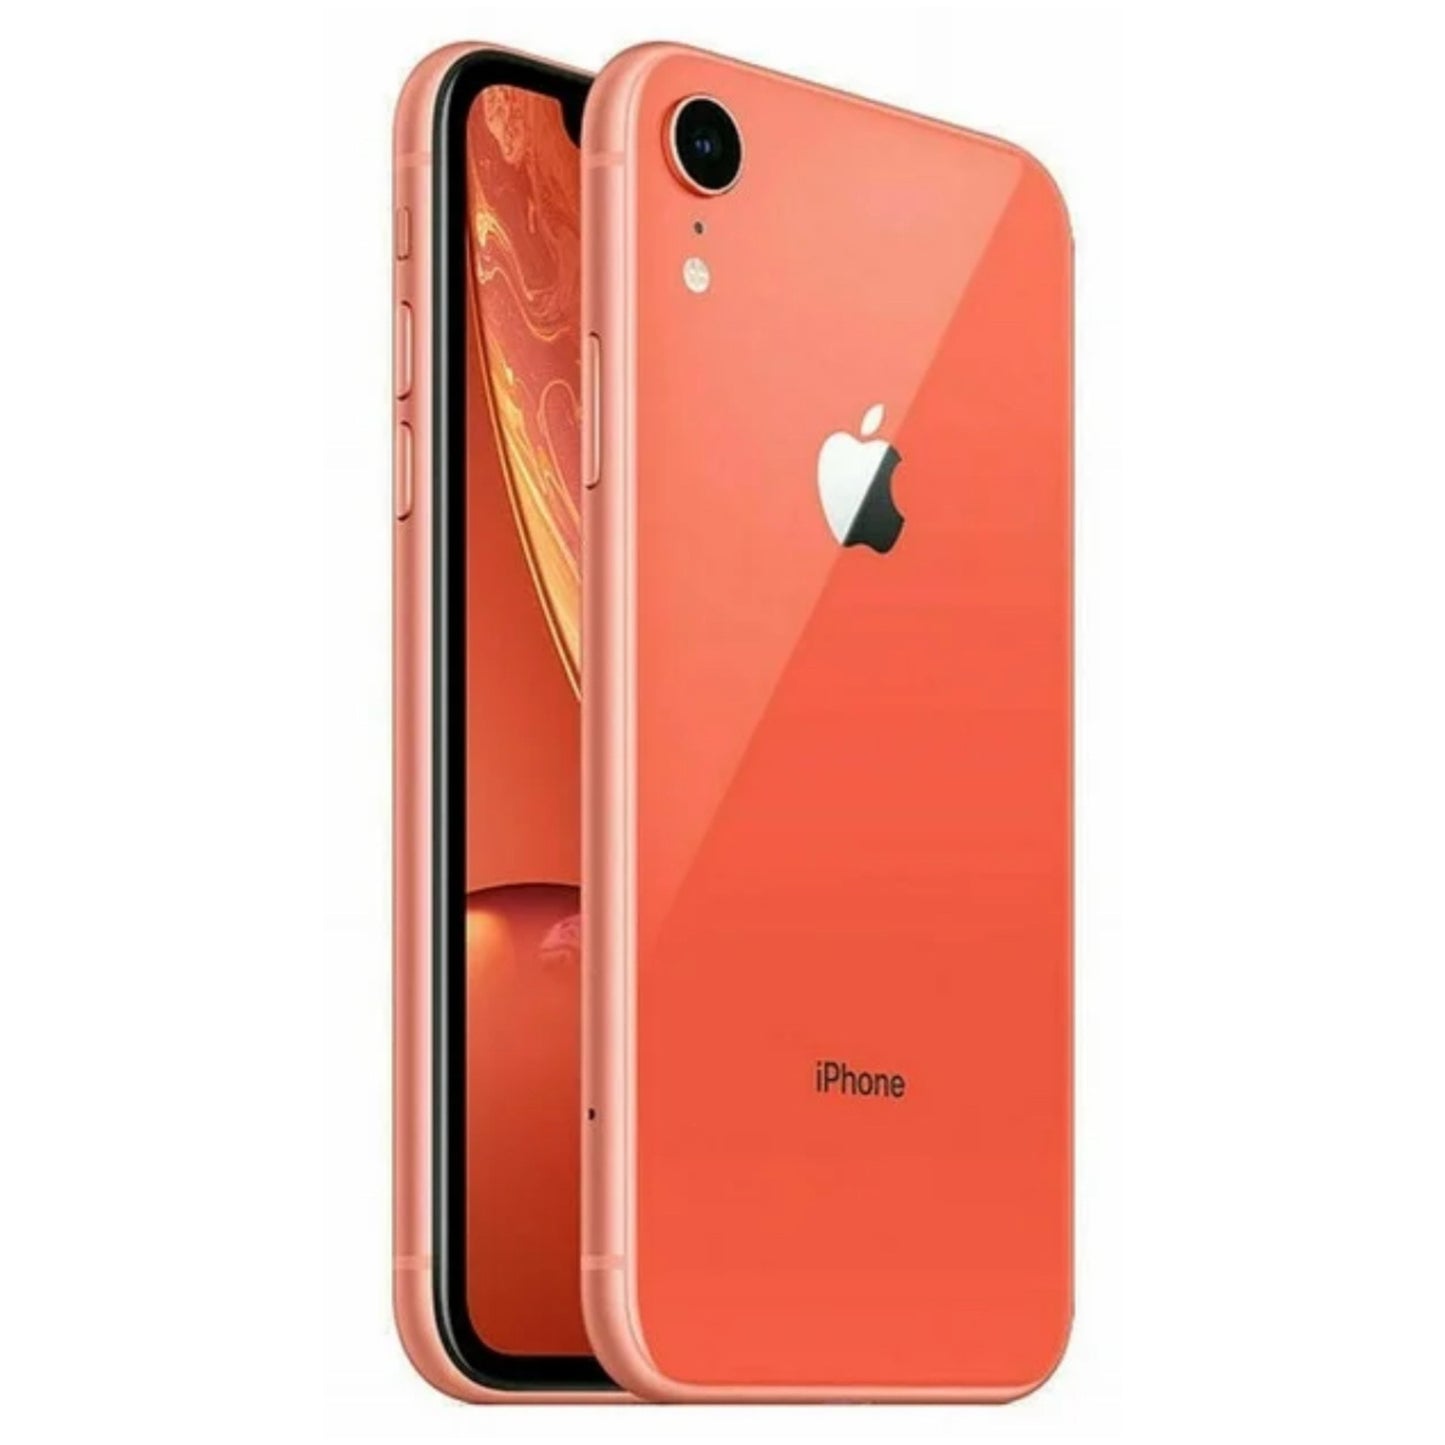 iPhone XR Coral 64 GB (desbloqueado) usado